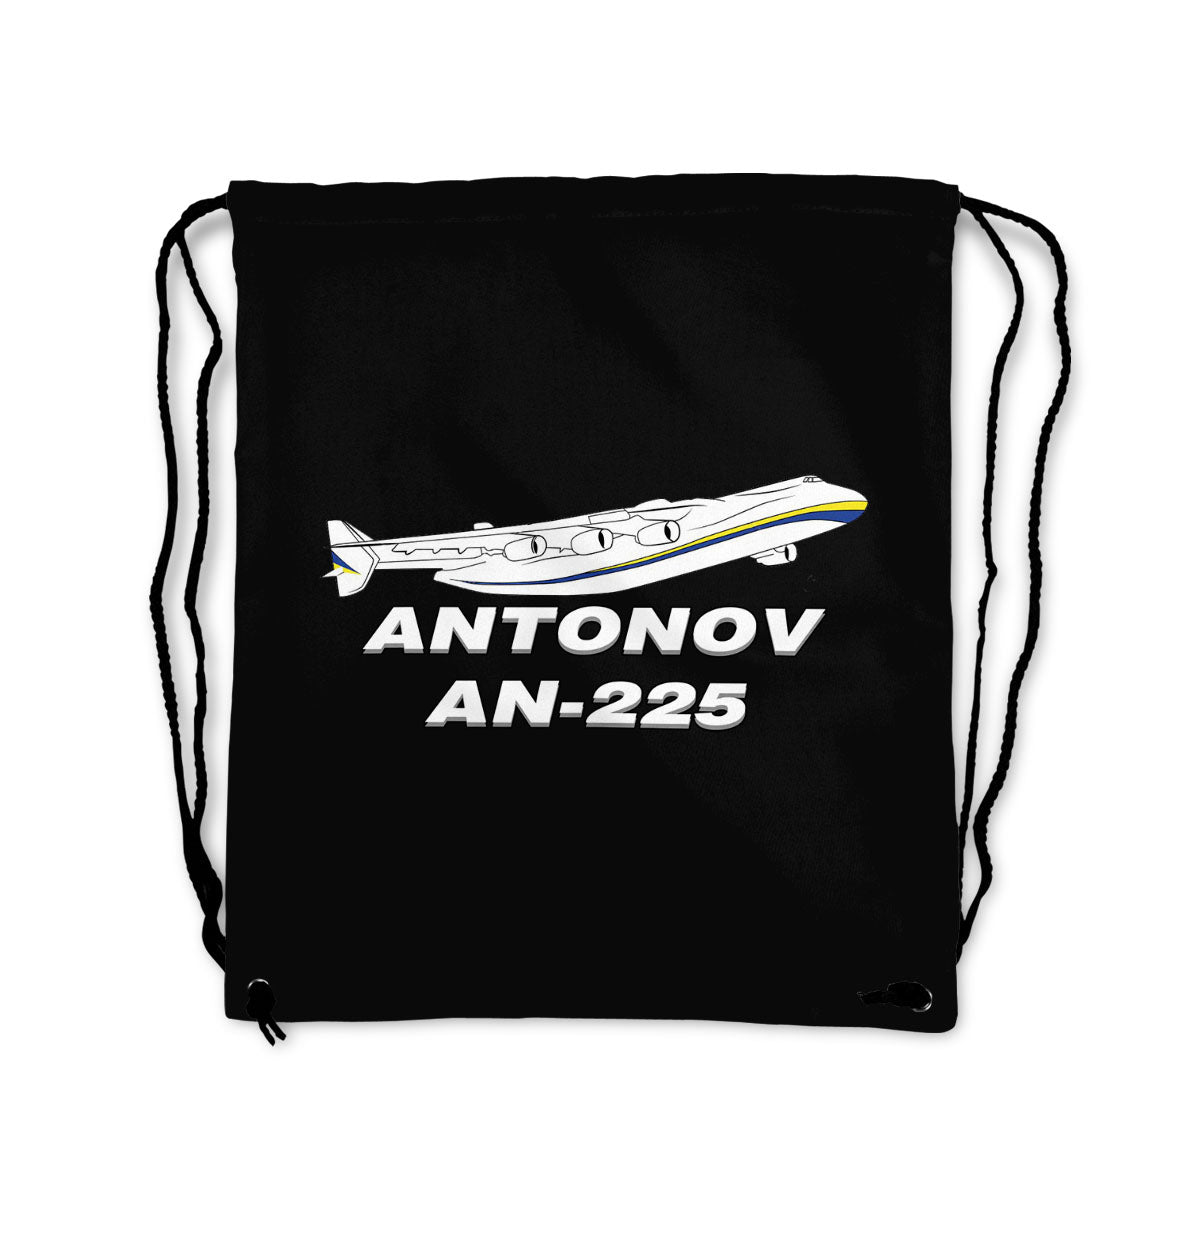 Antonov AN-225 (27) Designed Drawstring Bags